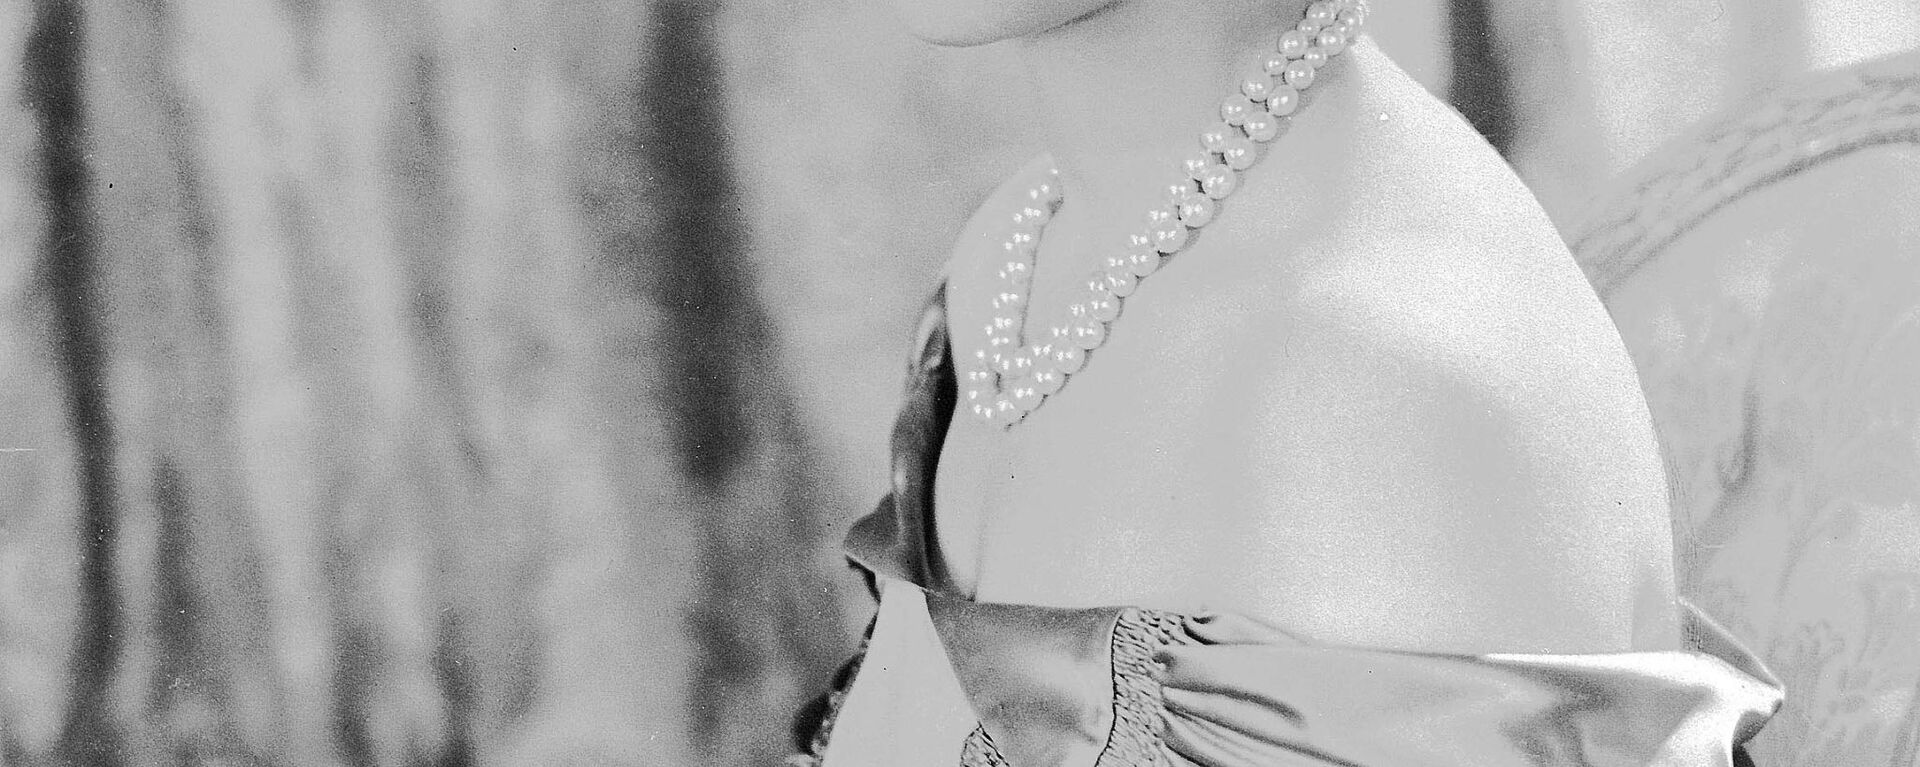 Принцесса Елизавета, 1949 год - Sputnik Латвия, 1920, 21.04.2021